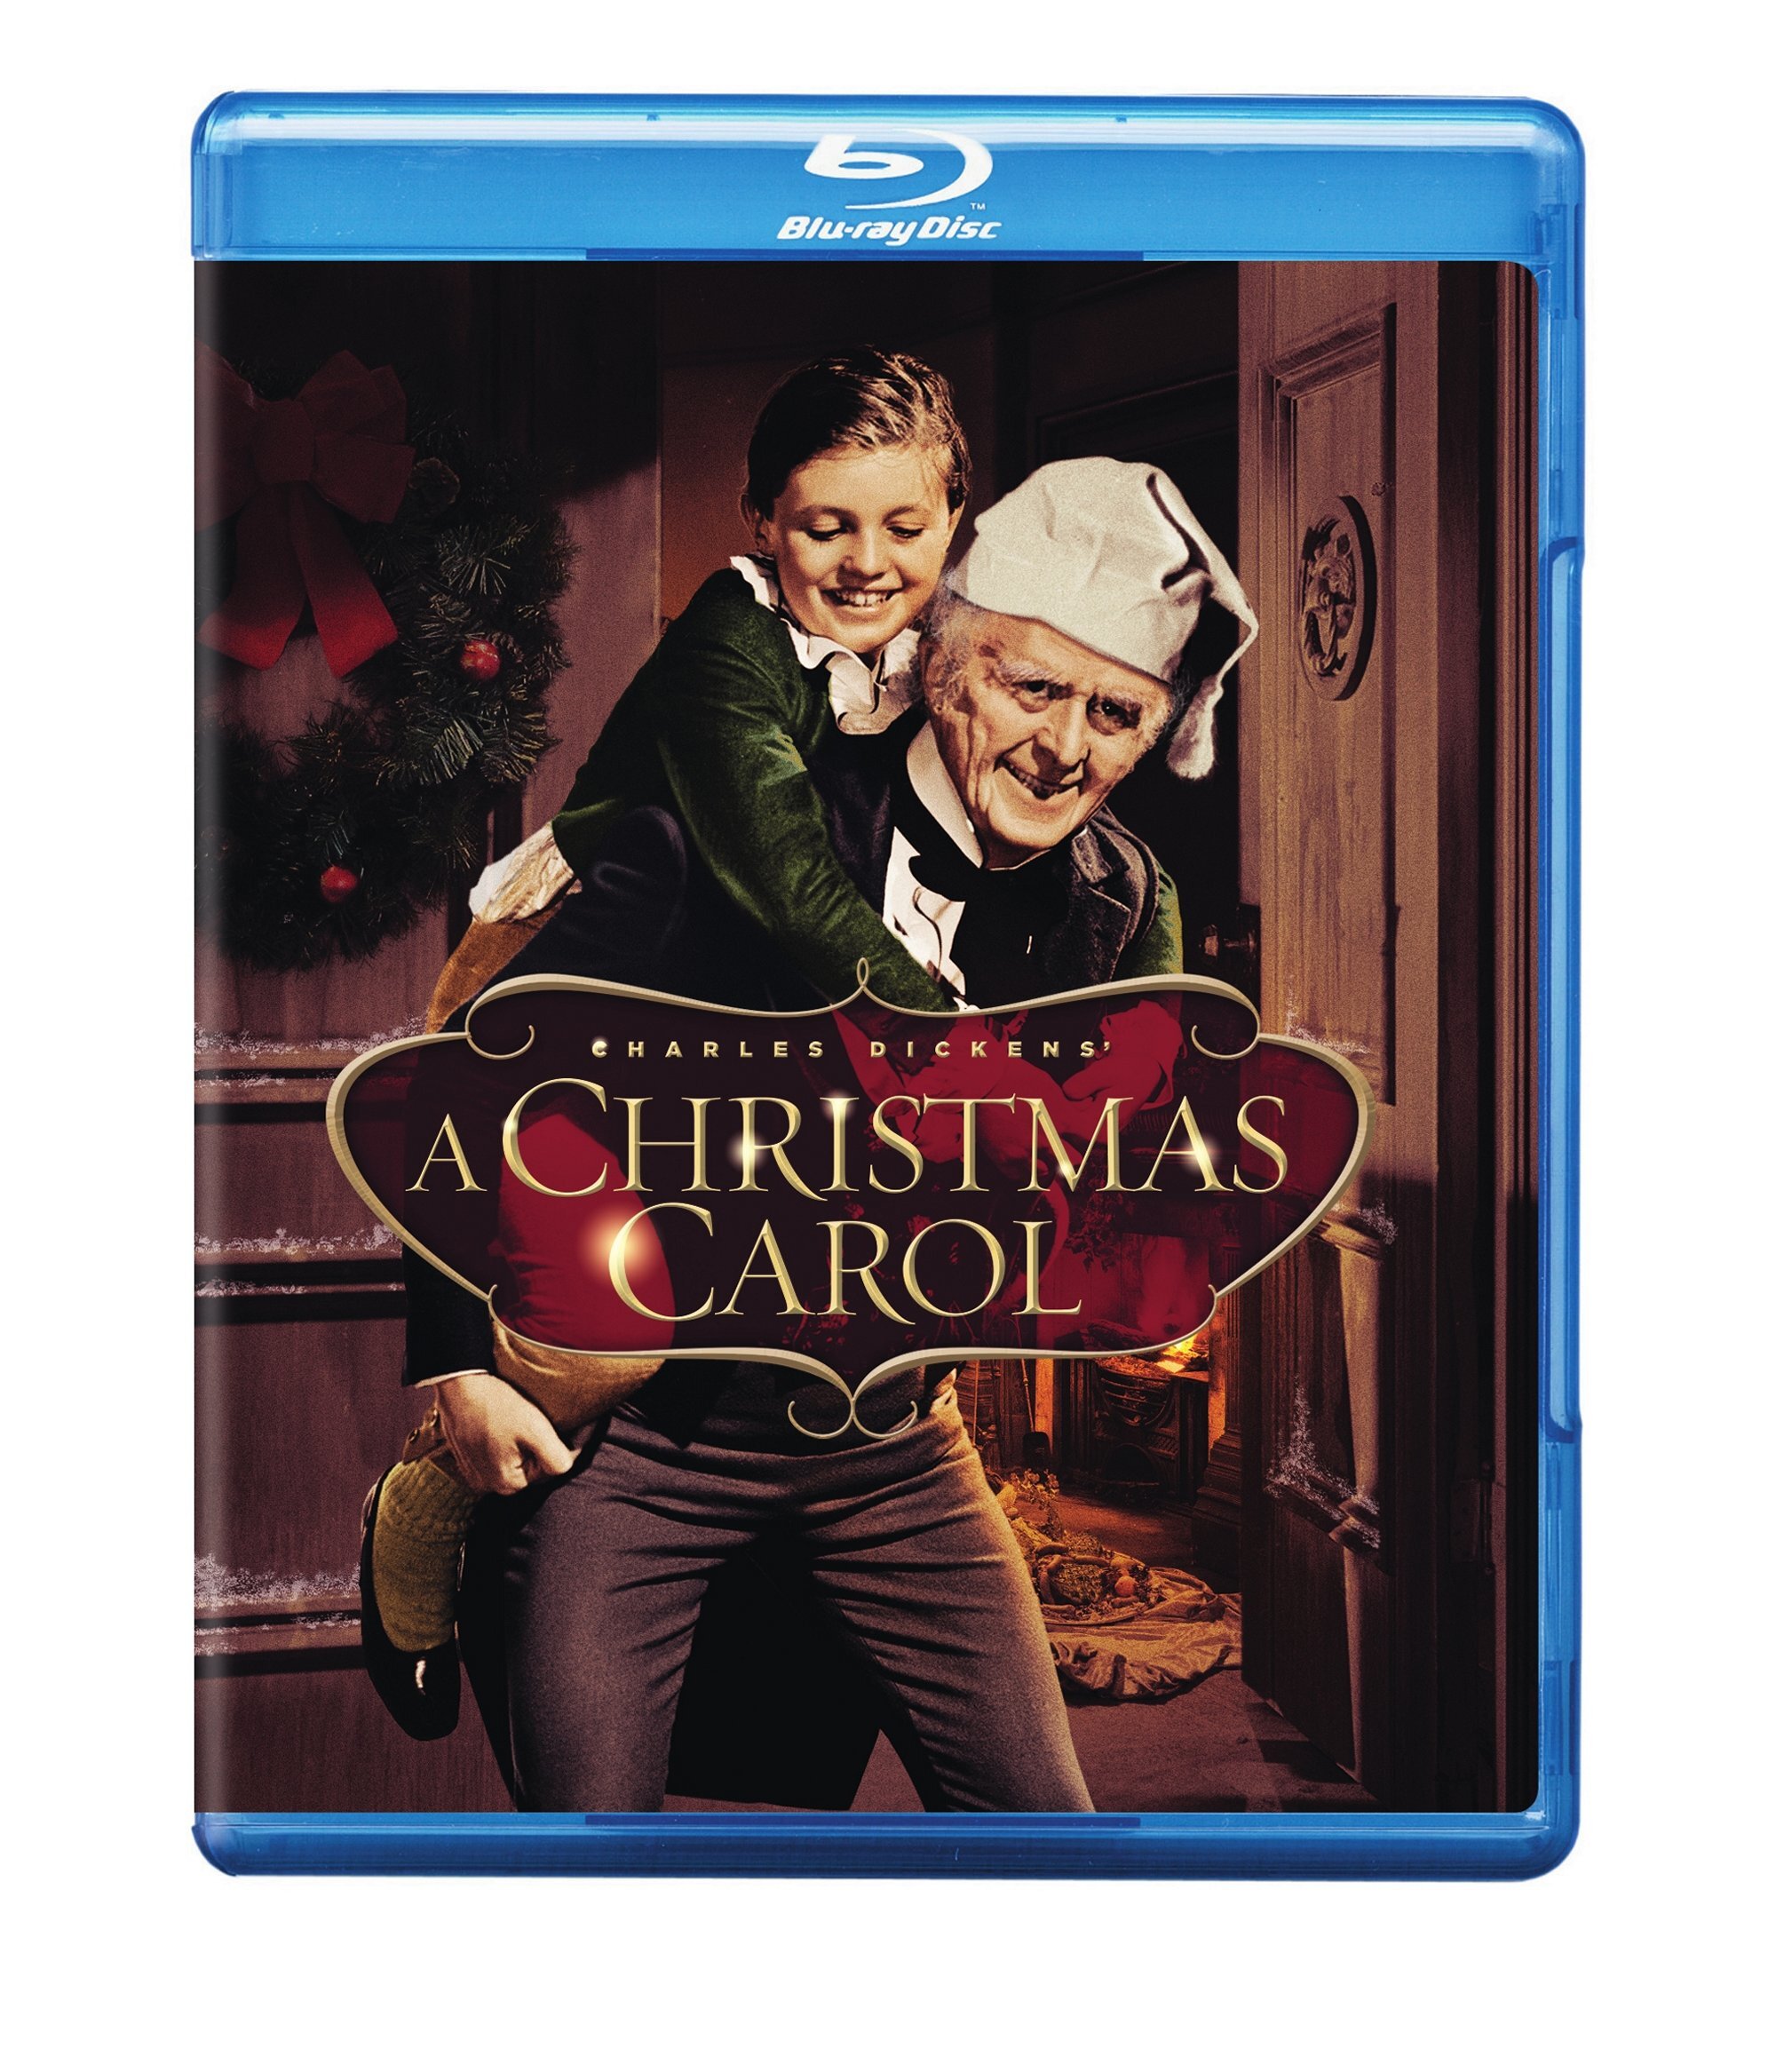 A Christmas Carol - Blu-ray [ 1938 ]  - Classic Movies On Blu-ray - Movies On GRUV